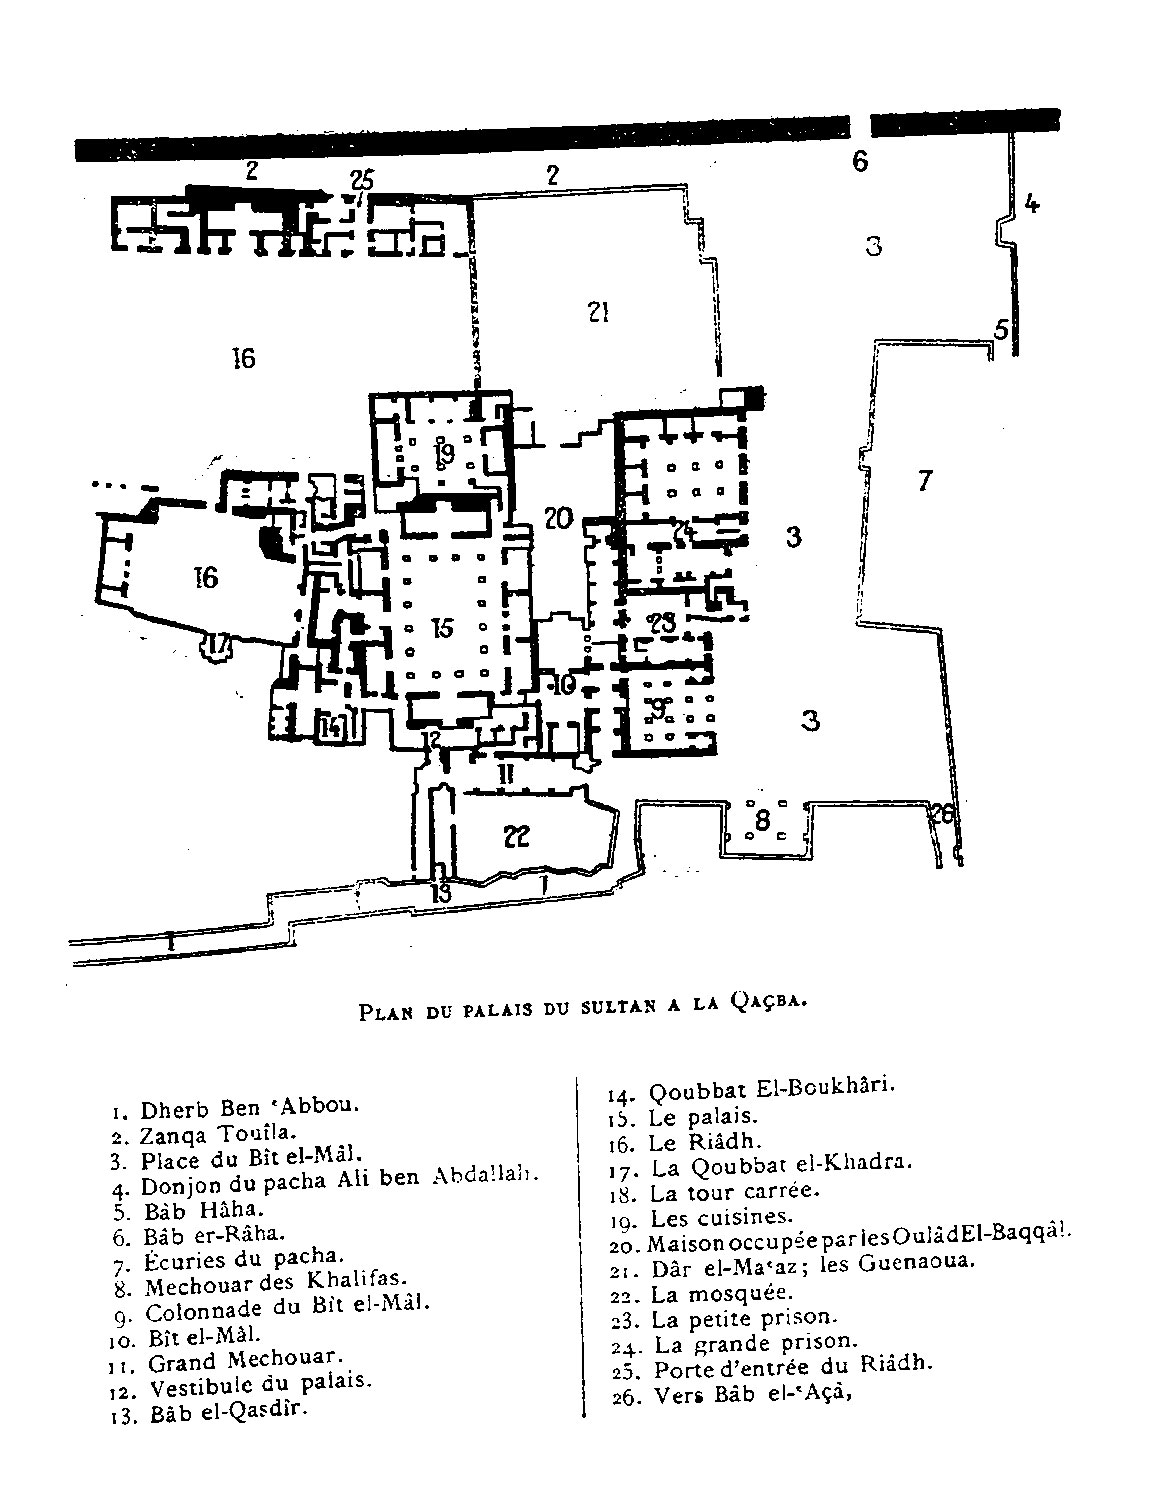 Place du Tabor - Plan of the Qasba 